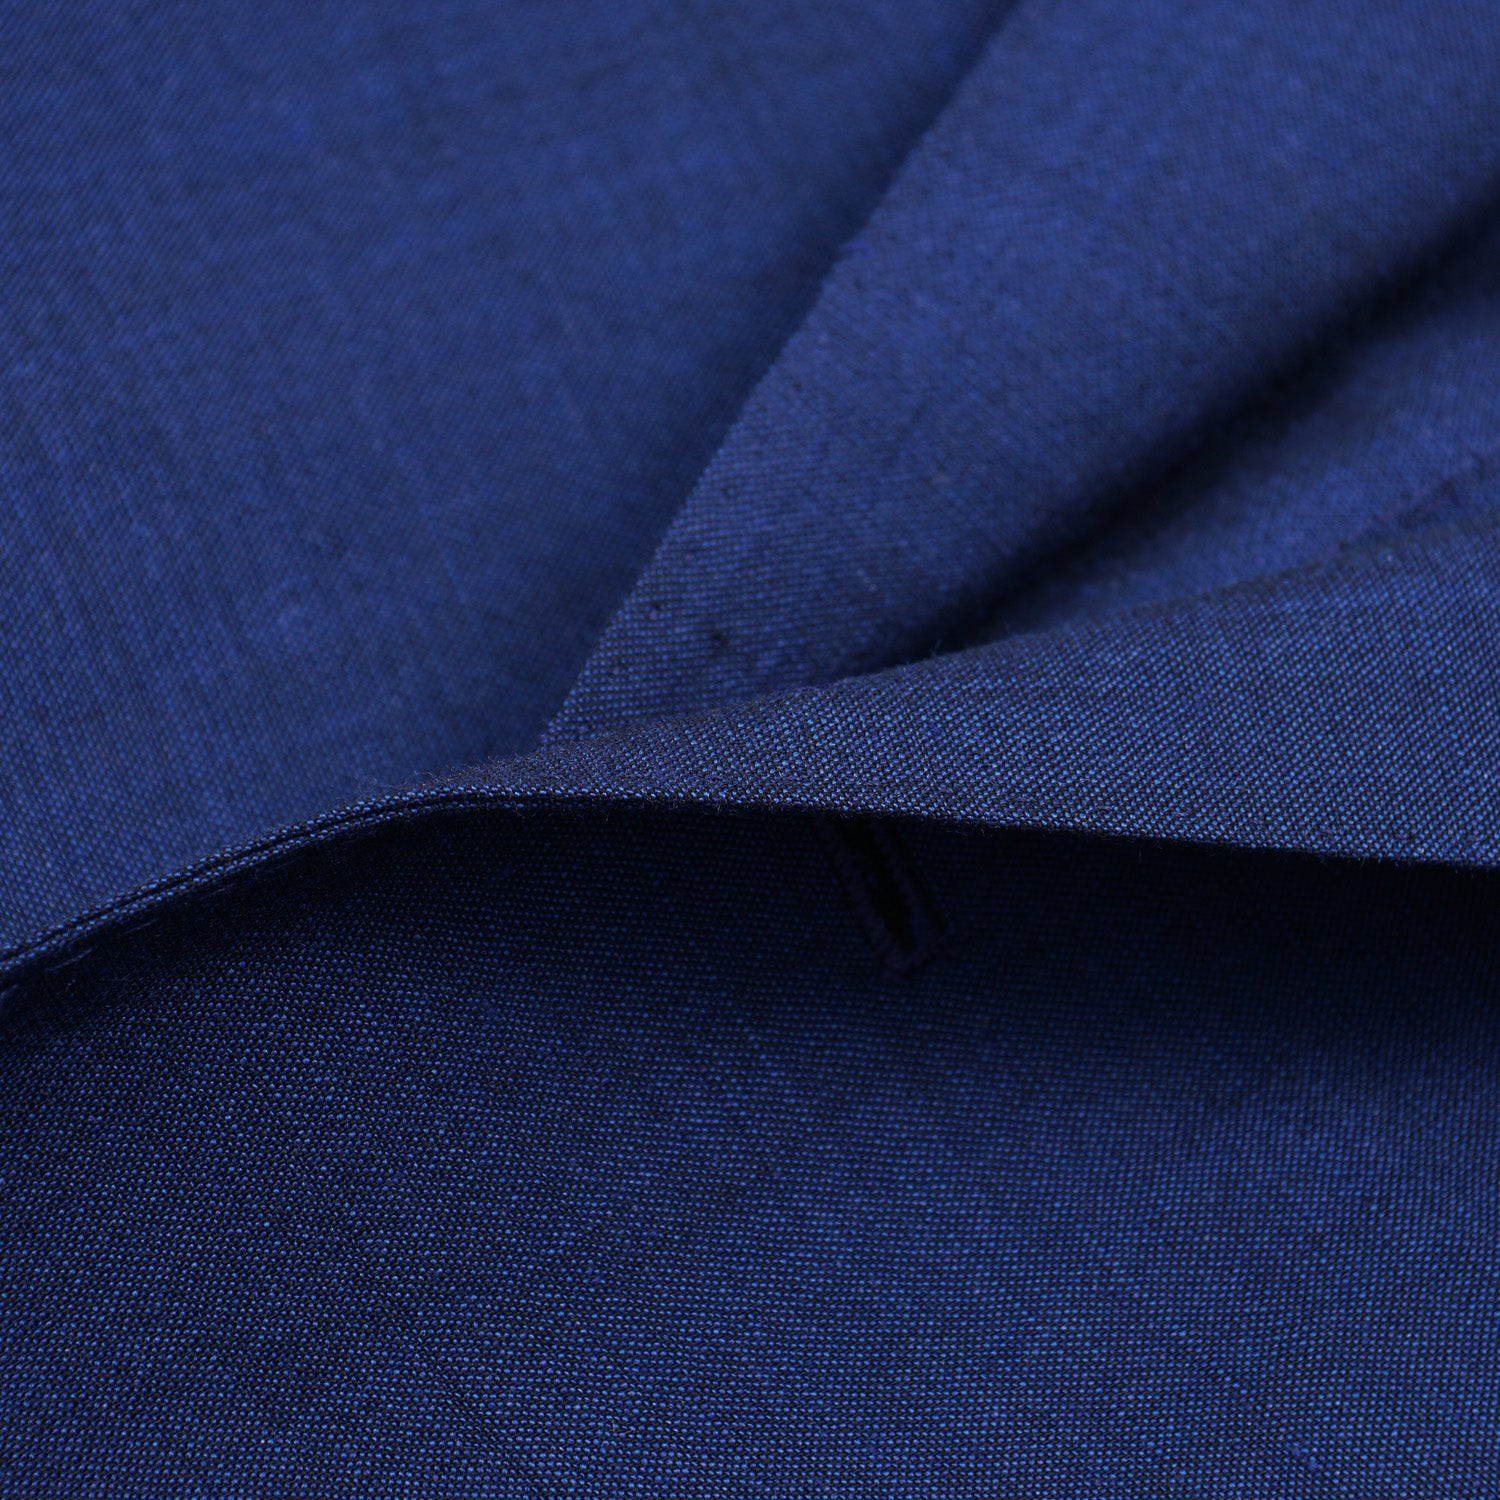 Boglioli Wool and Linen 'K Jacket' Suit - Top Shelf Apparel